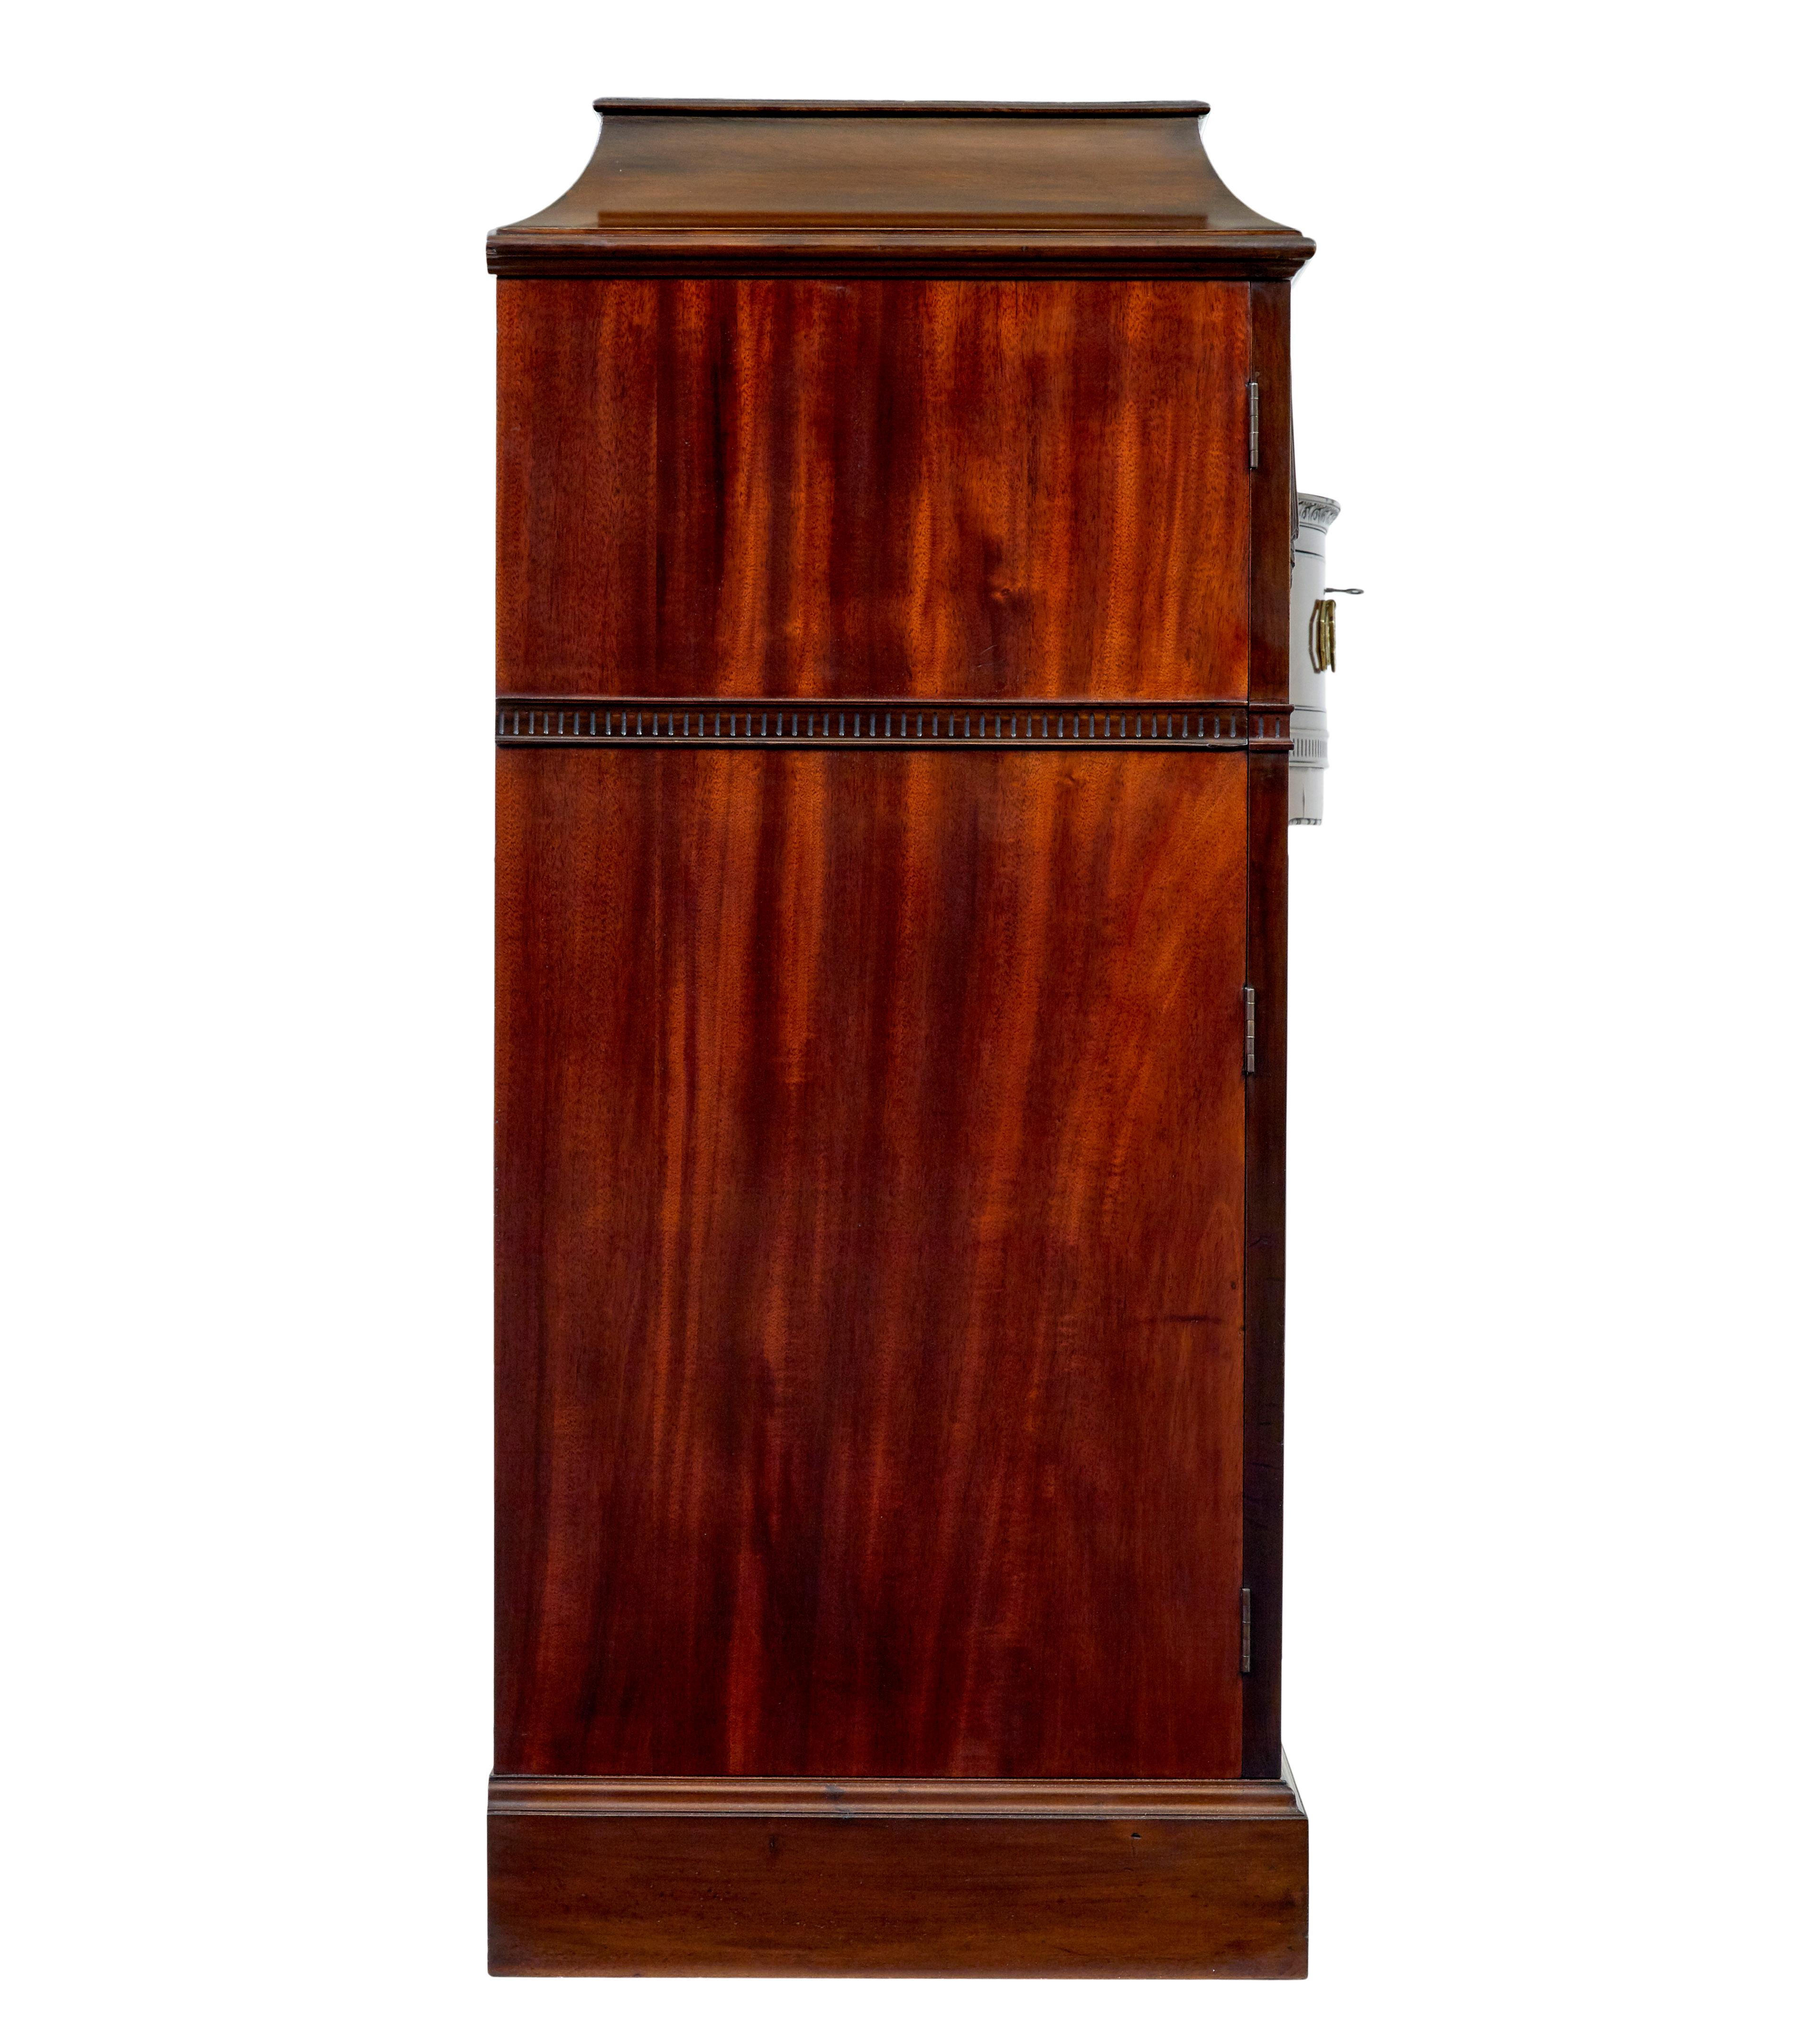 19th century Adams revival carved mahogany pedestal sideboard In Good Condition For Sale In Debenham, Suffolk